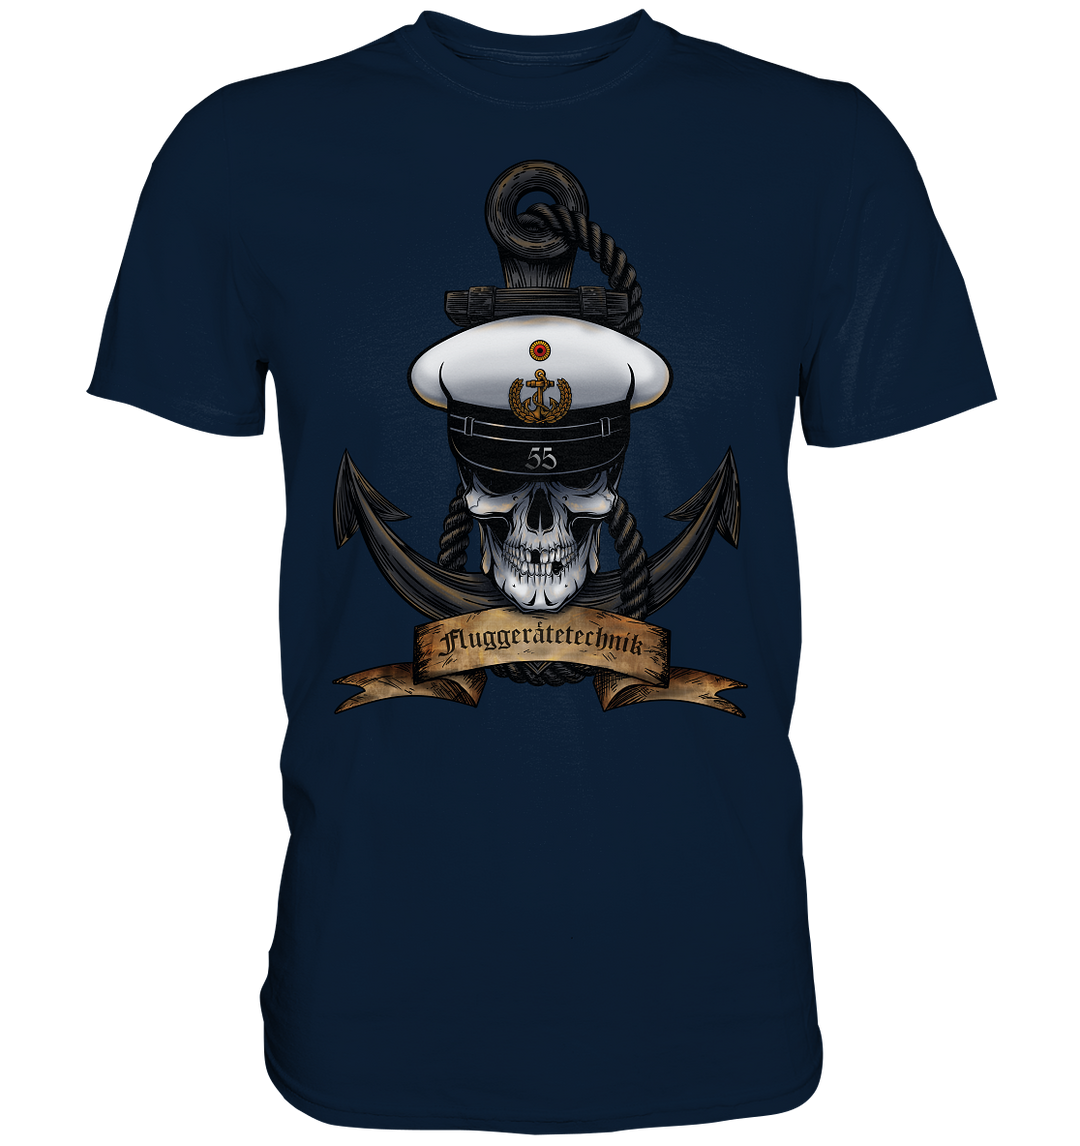 "Marine 55 - Fluggerätetechnik" - Premium Shirt